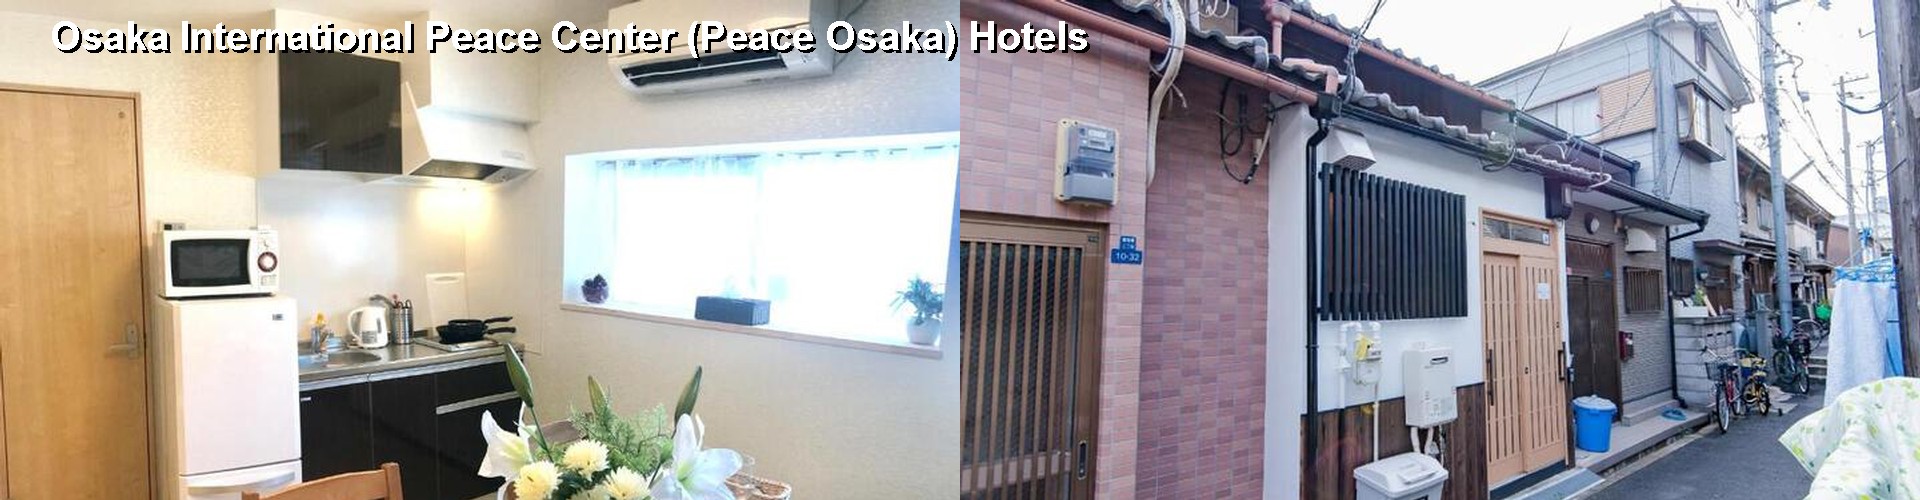 5 Best Hotels near Osaka International Peace Center (Peace Osaka)